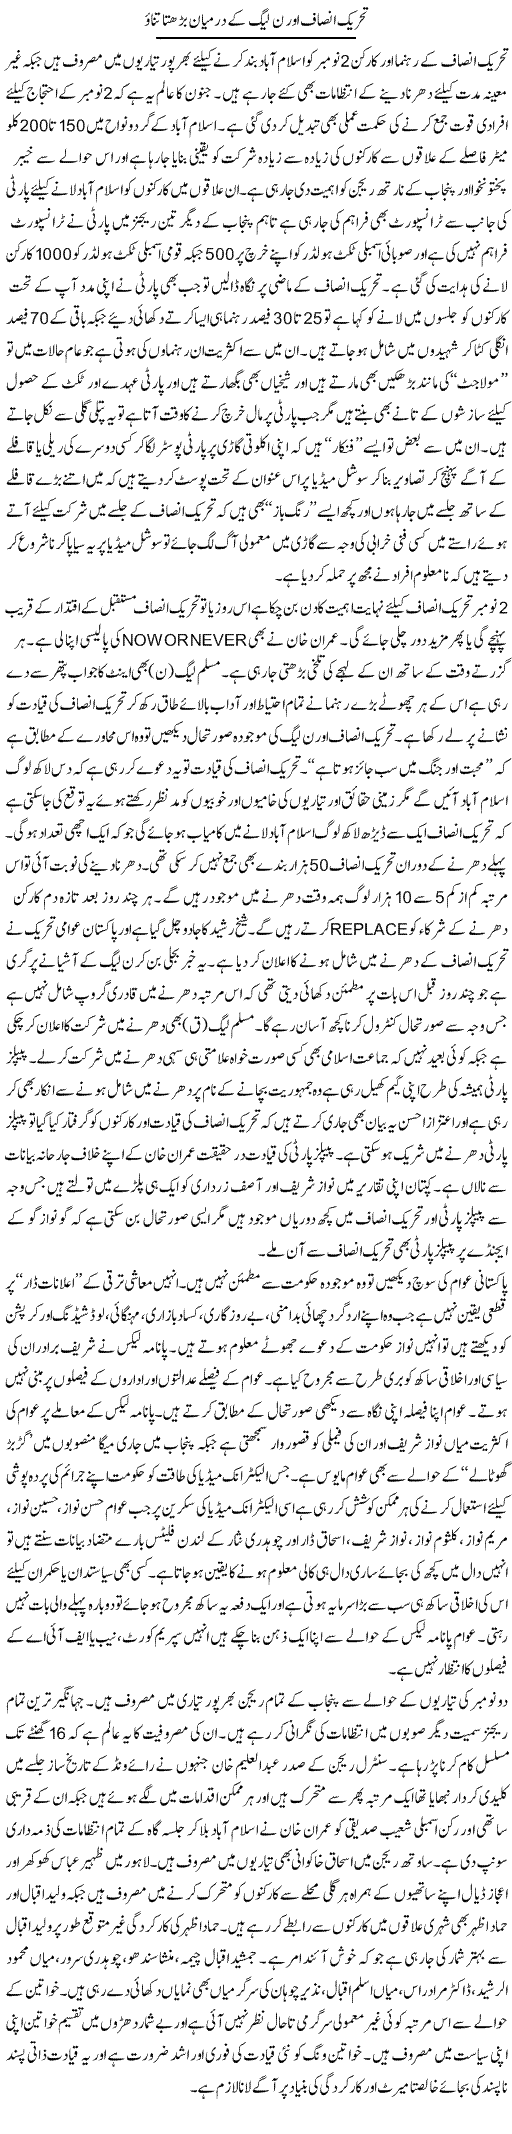 Tehrik Insaf Aor N League Ke Darmian Barhta Tanao | Rizwan Asif | Daily Urdu Columns